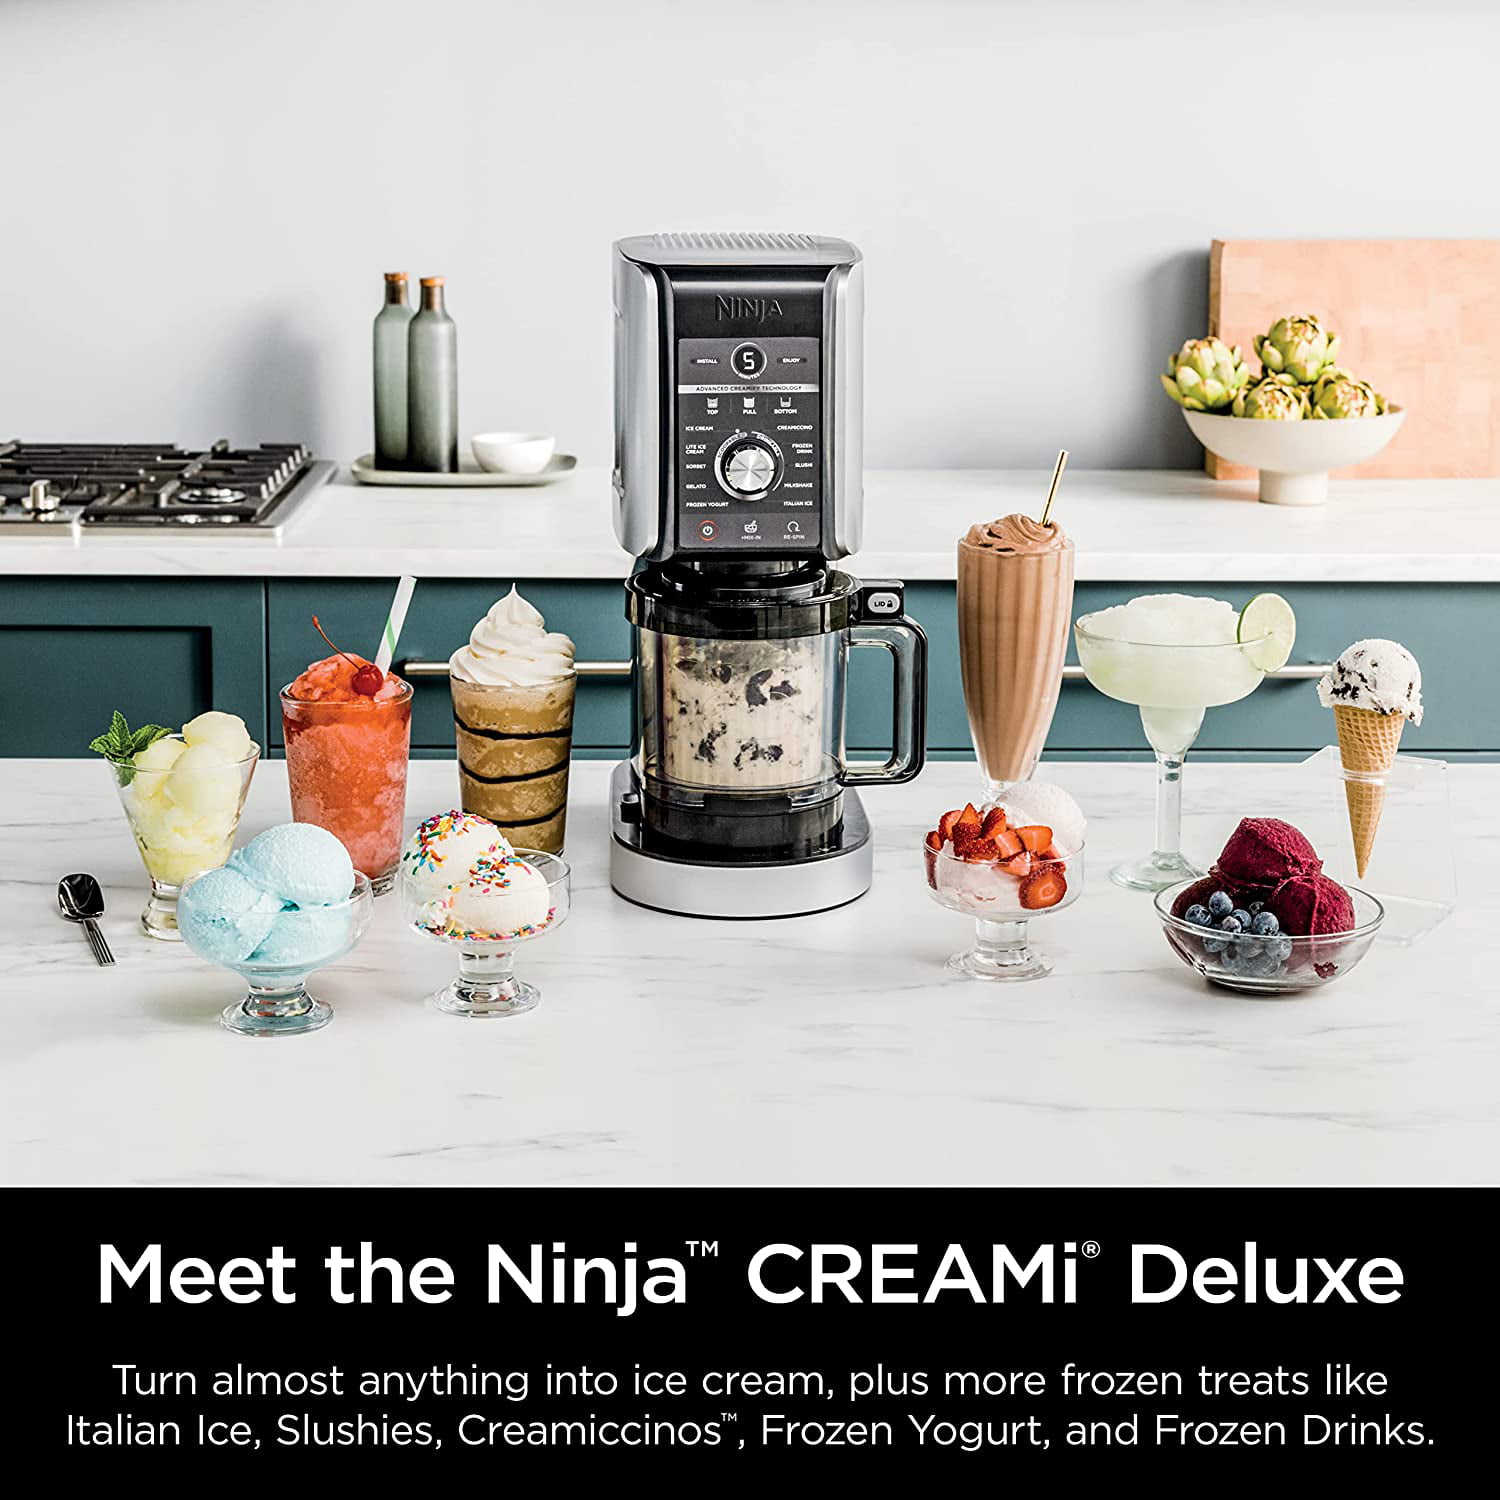 Refurbished Ninja Creami Deluxe 11-in-1 Ice Cream Maker $119.99 Shipped